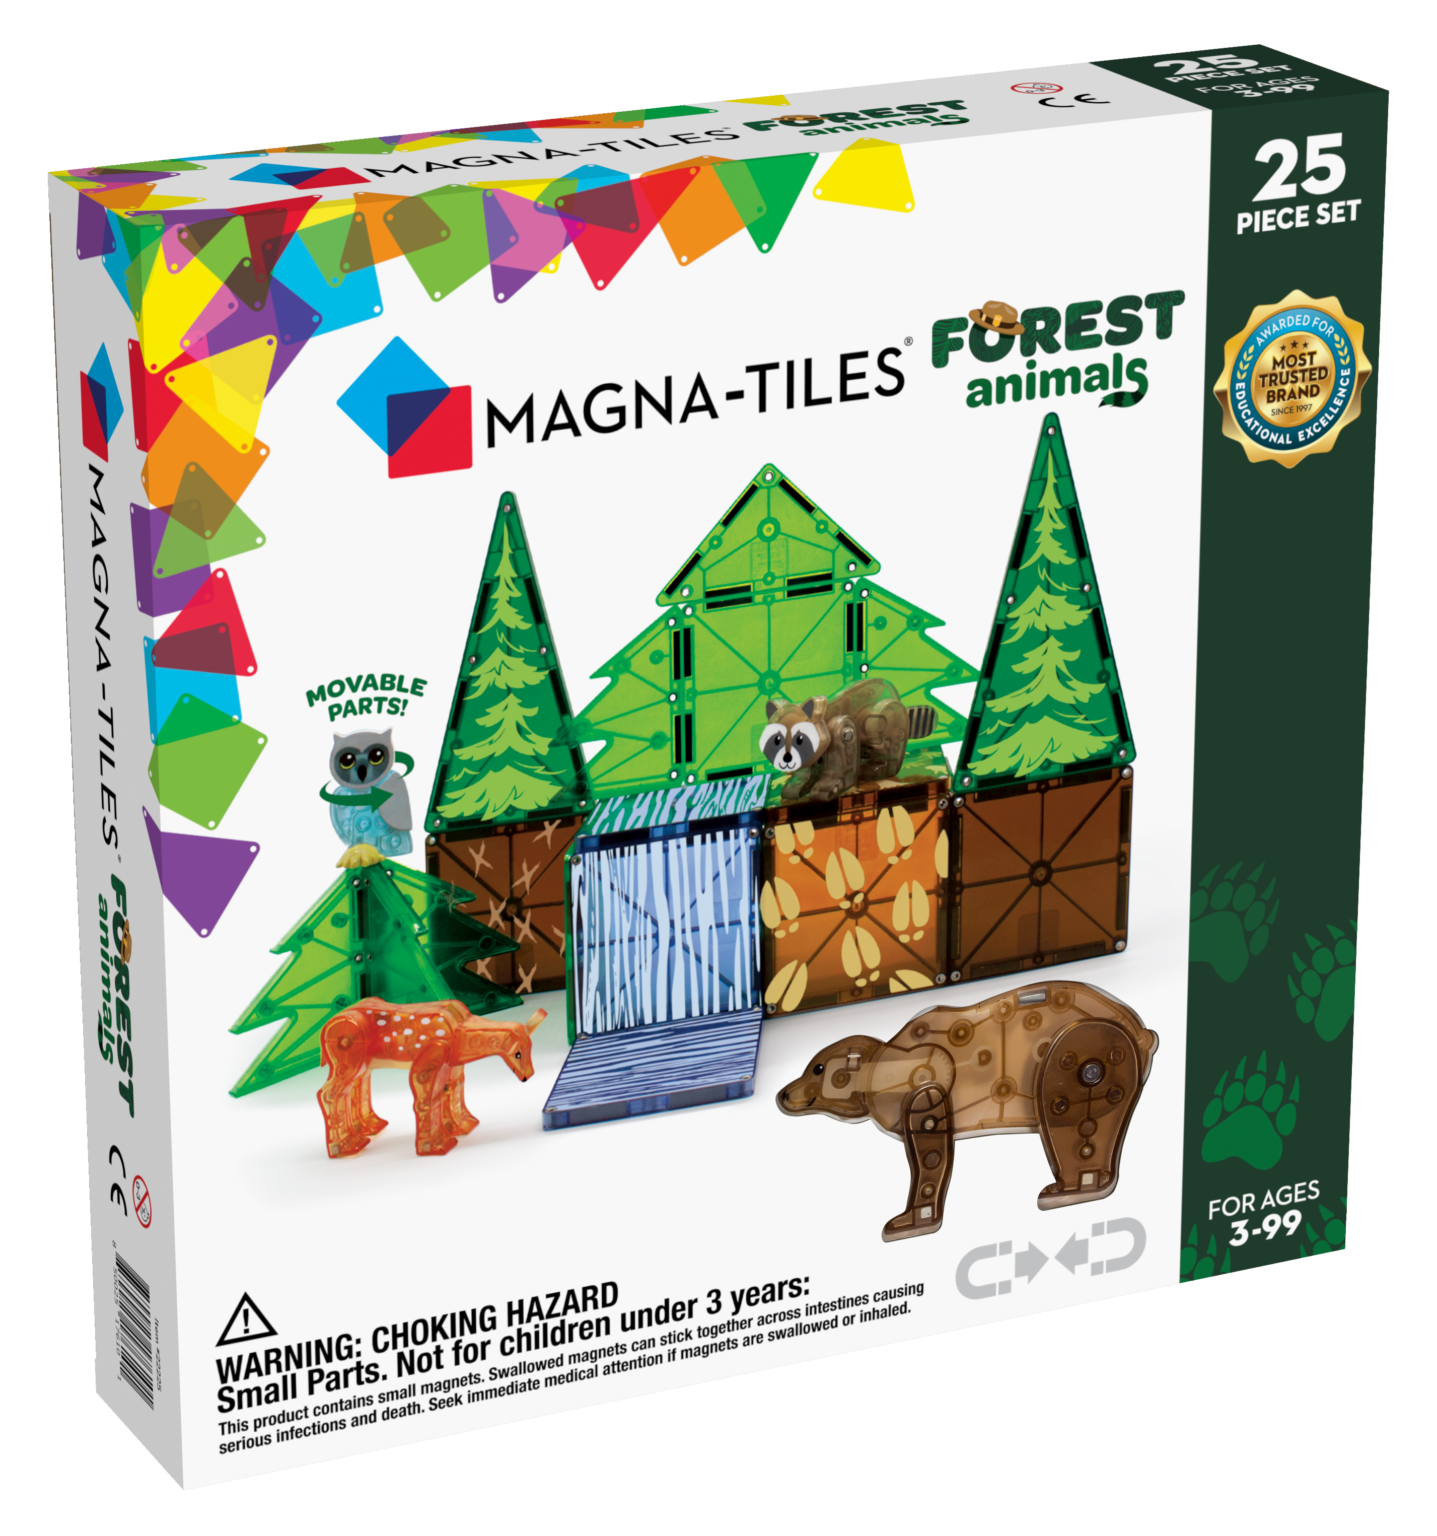 magna-tiles forest animals